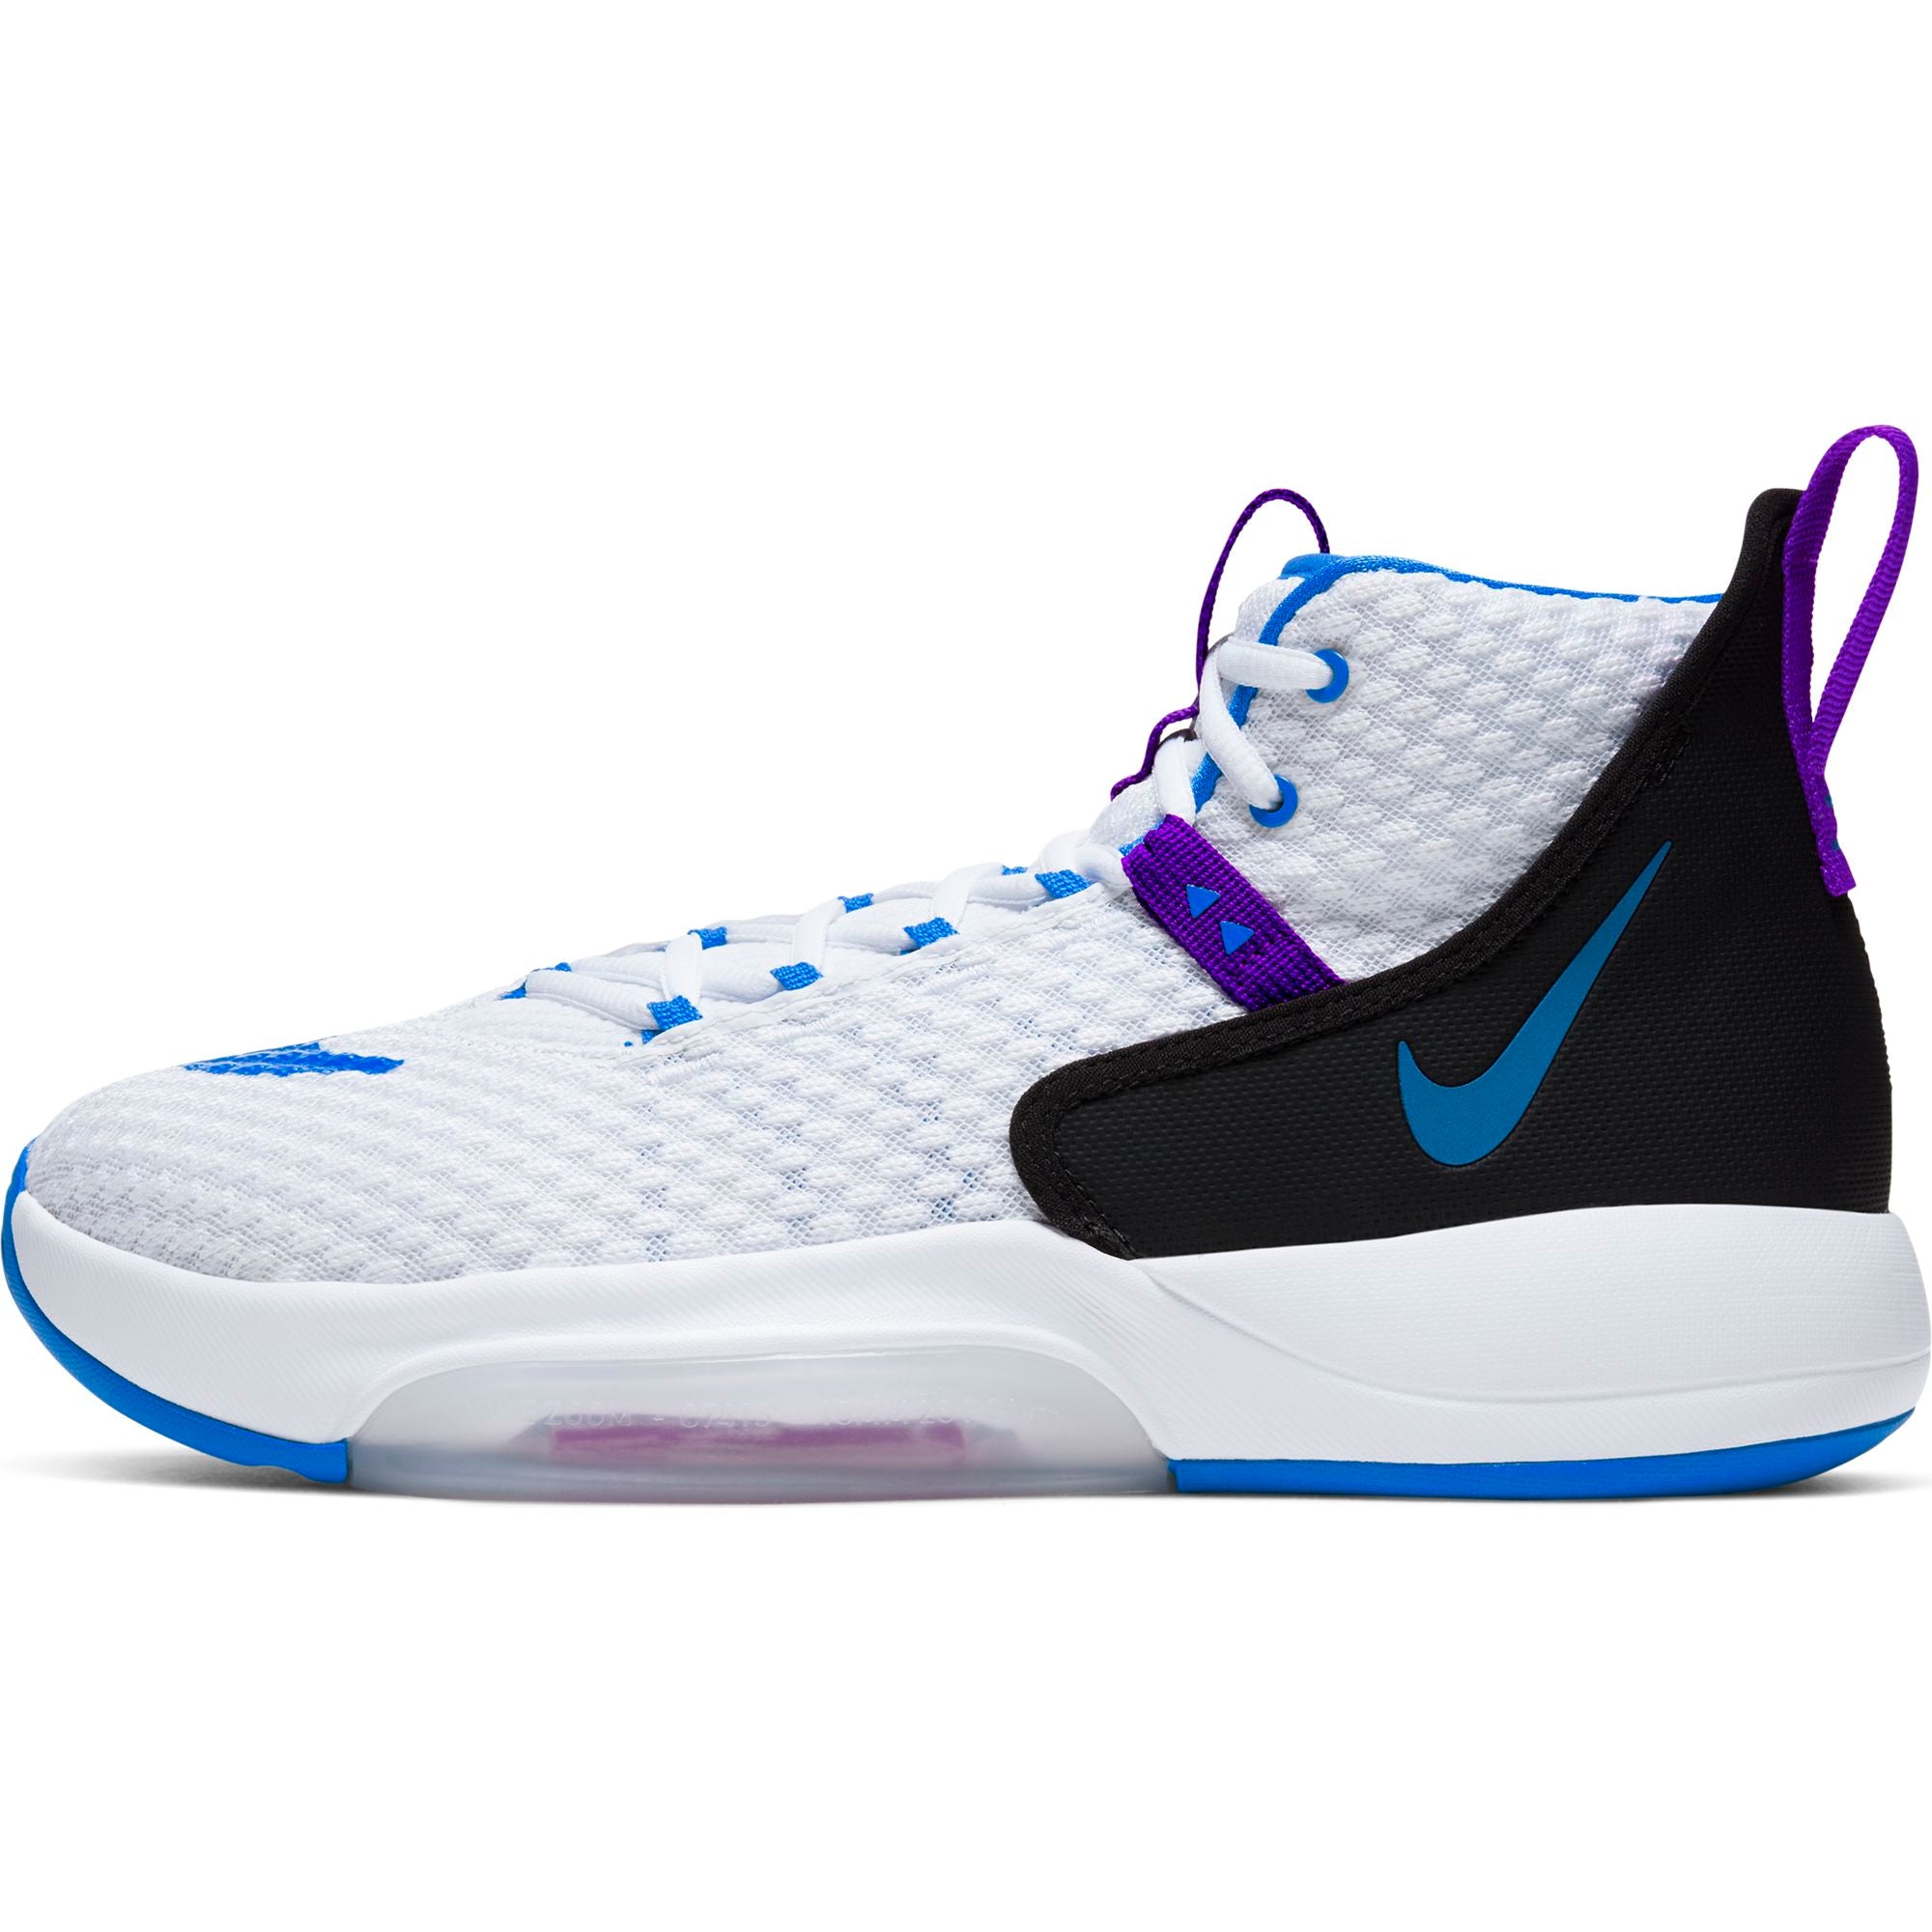 Nike Basketball Zoom Rize Boot/Shoe - White/Photo Blue/Black/Voltage – SwiSh basketball